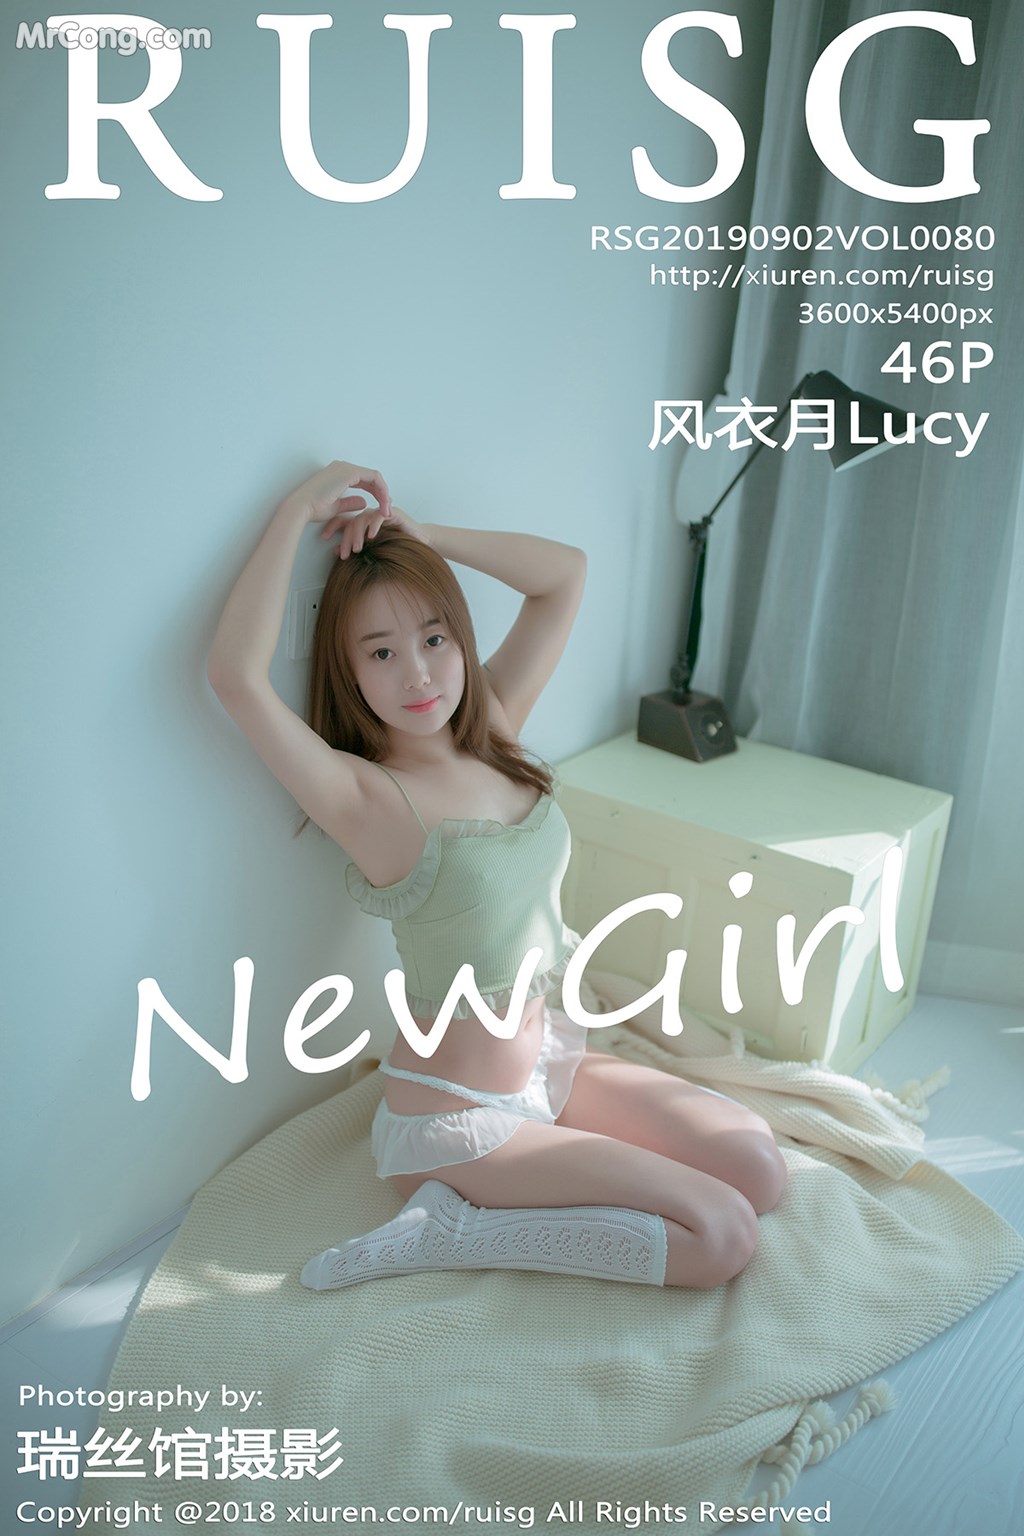 RuiSG Vol.080: 风衣 月 Lucy (47 photos) photo 1-0